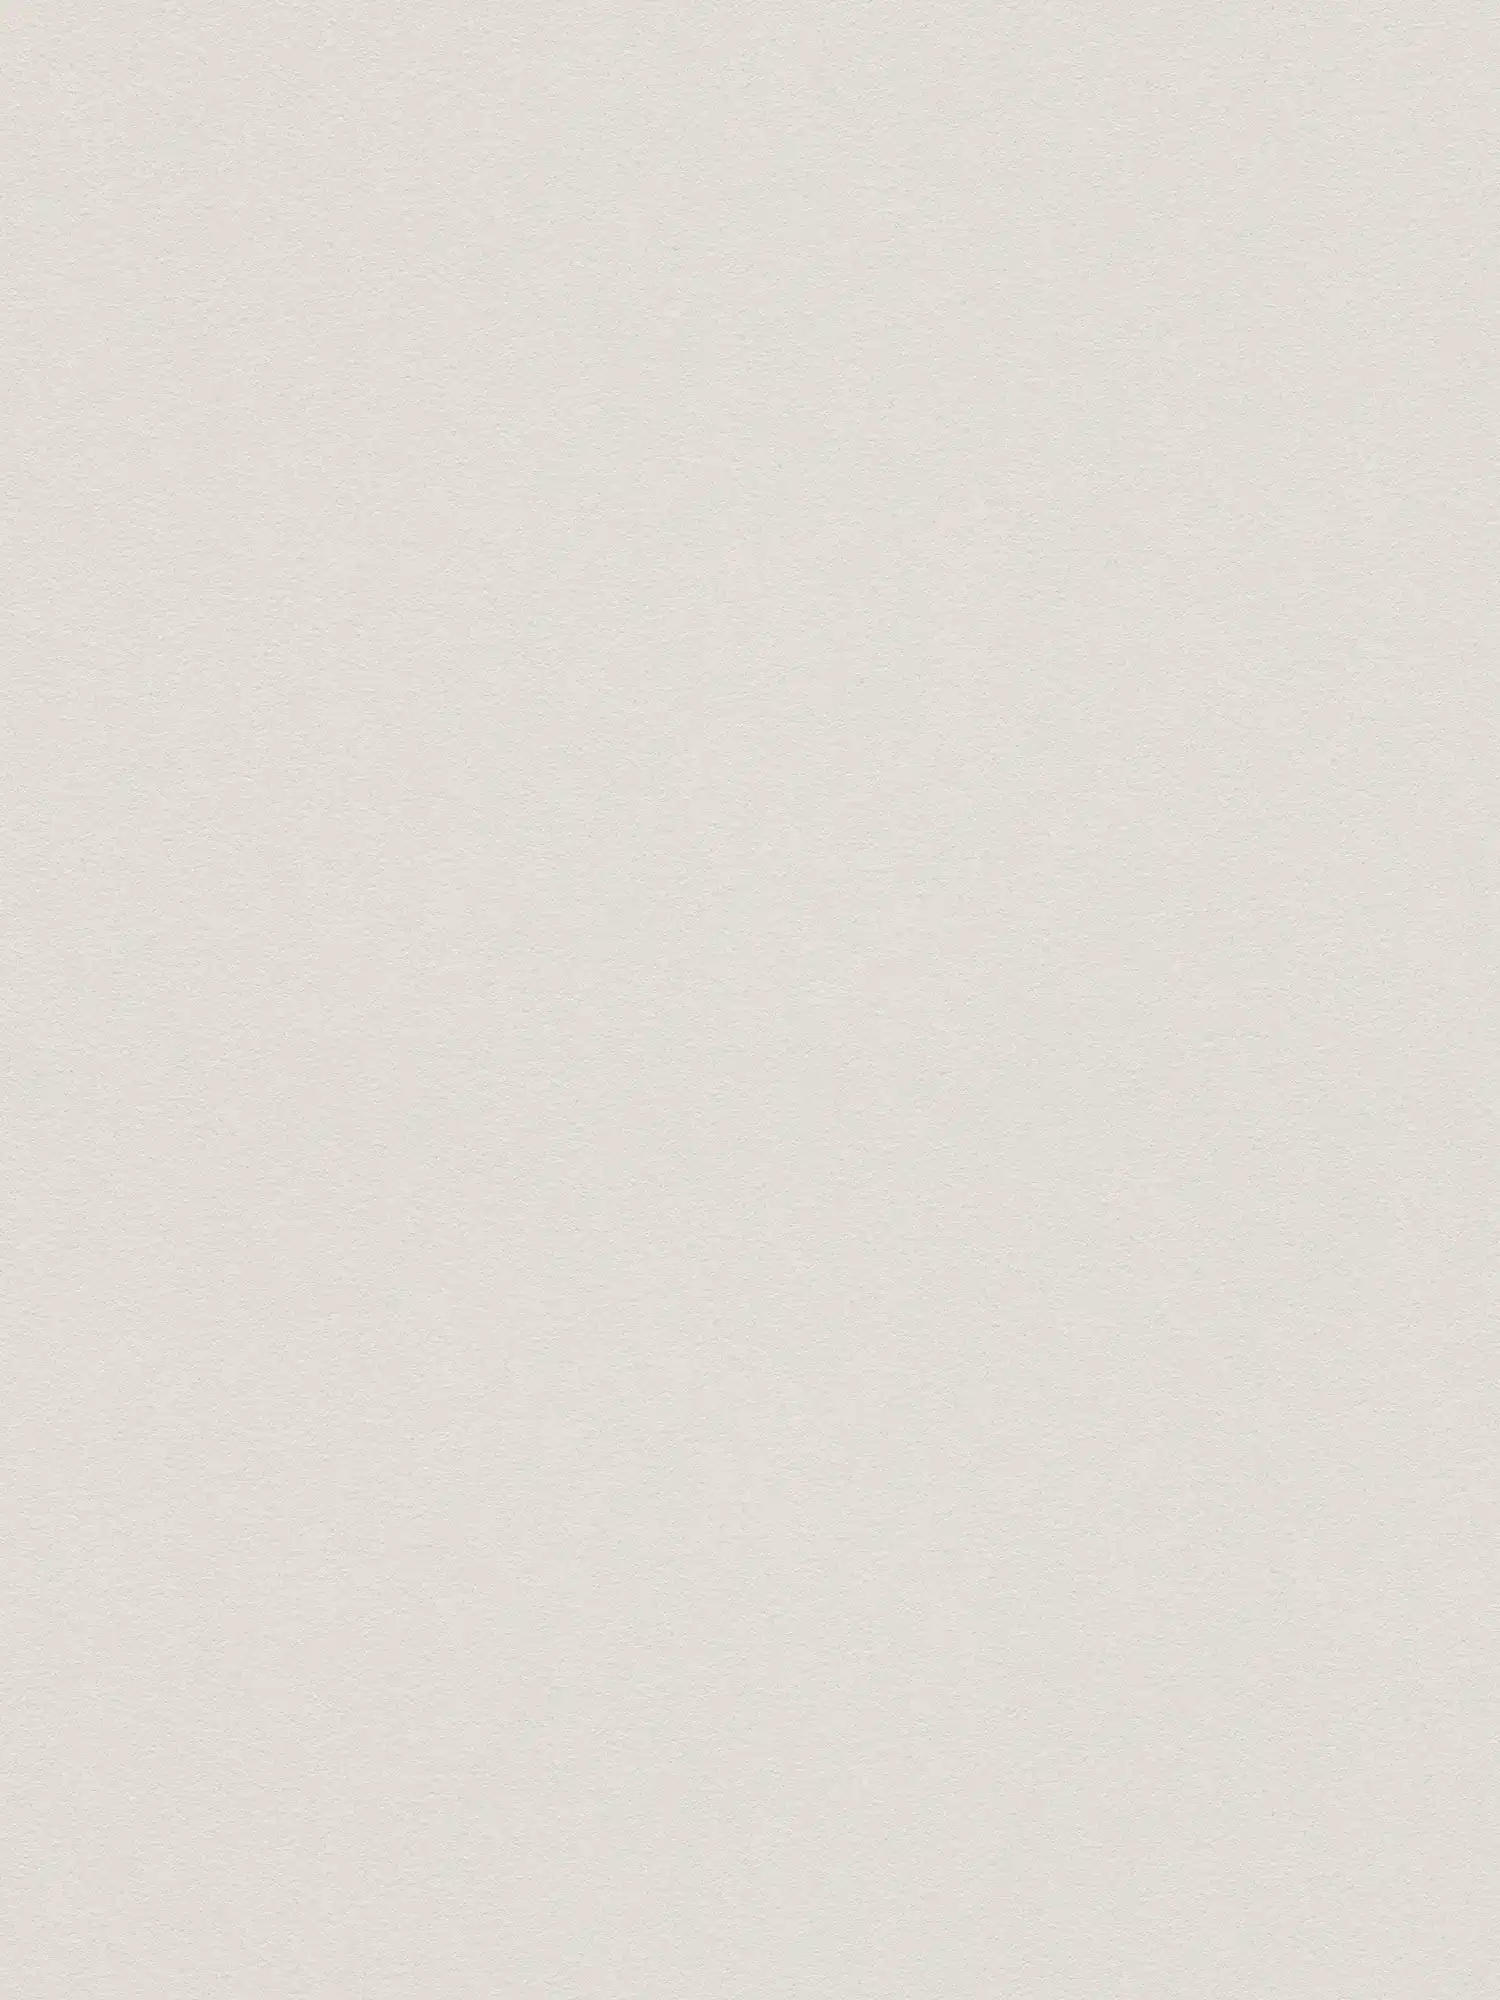 Carta da parati neutra con superficie opaca in seta - grigio
